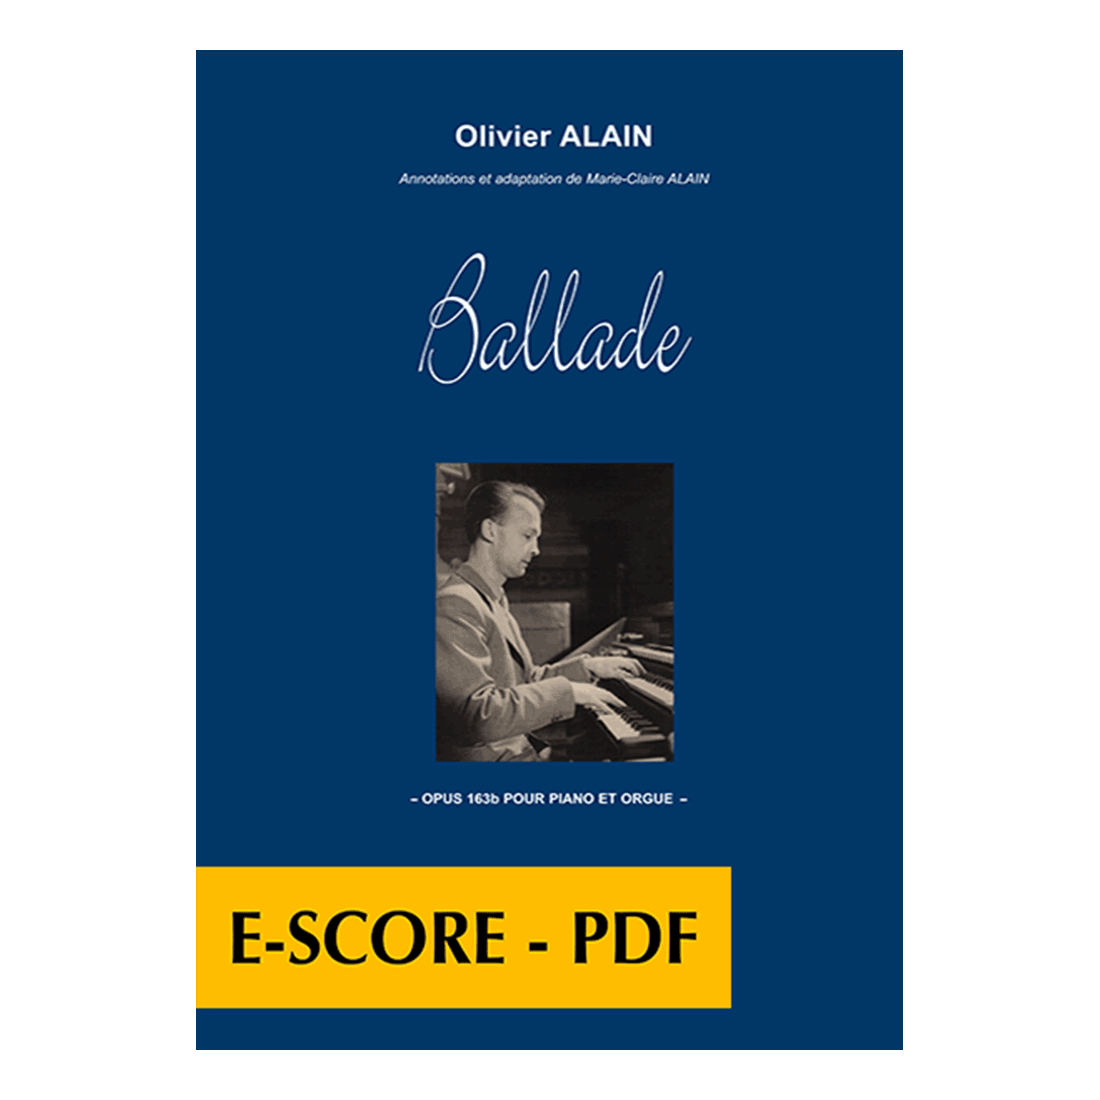 Ballade pour piano et orgue - E-score PDF